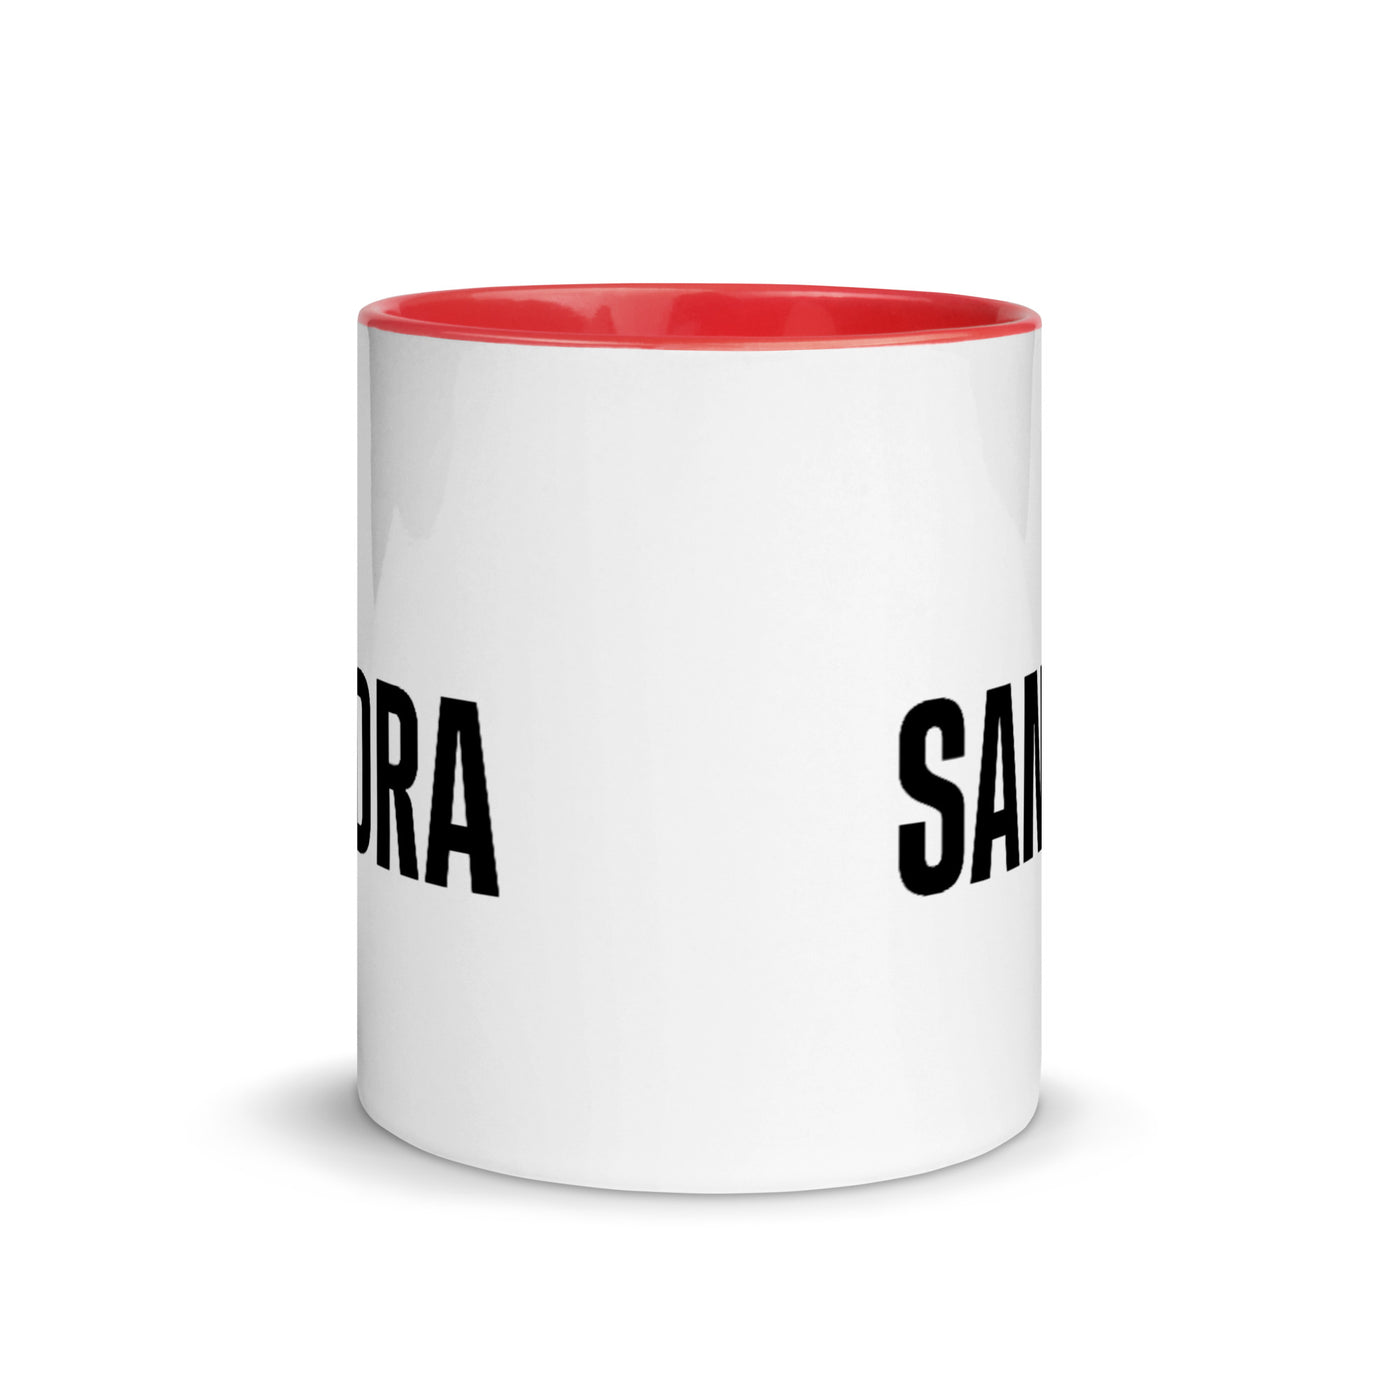 Sandra - Mug with Color Inside